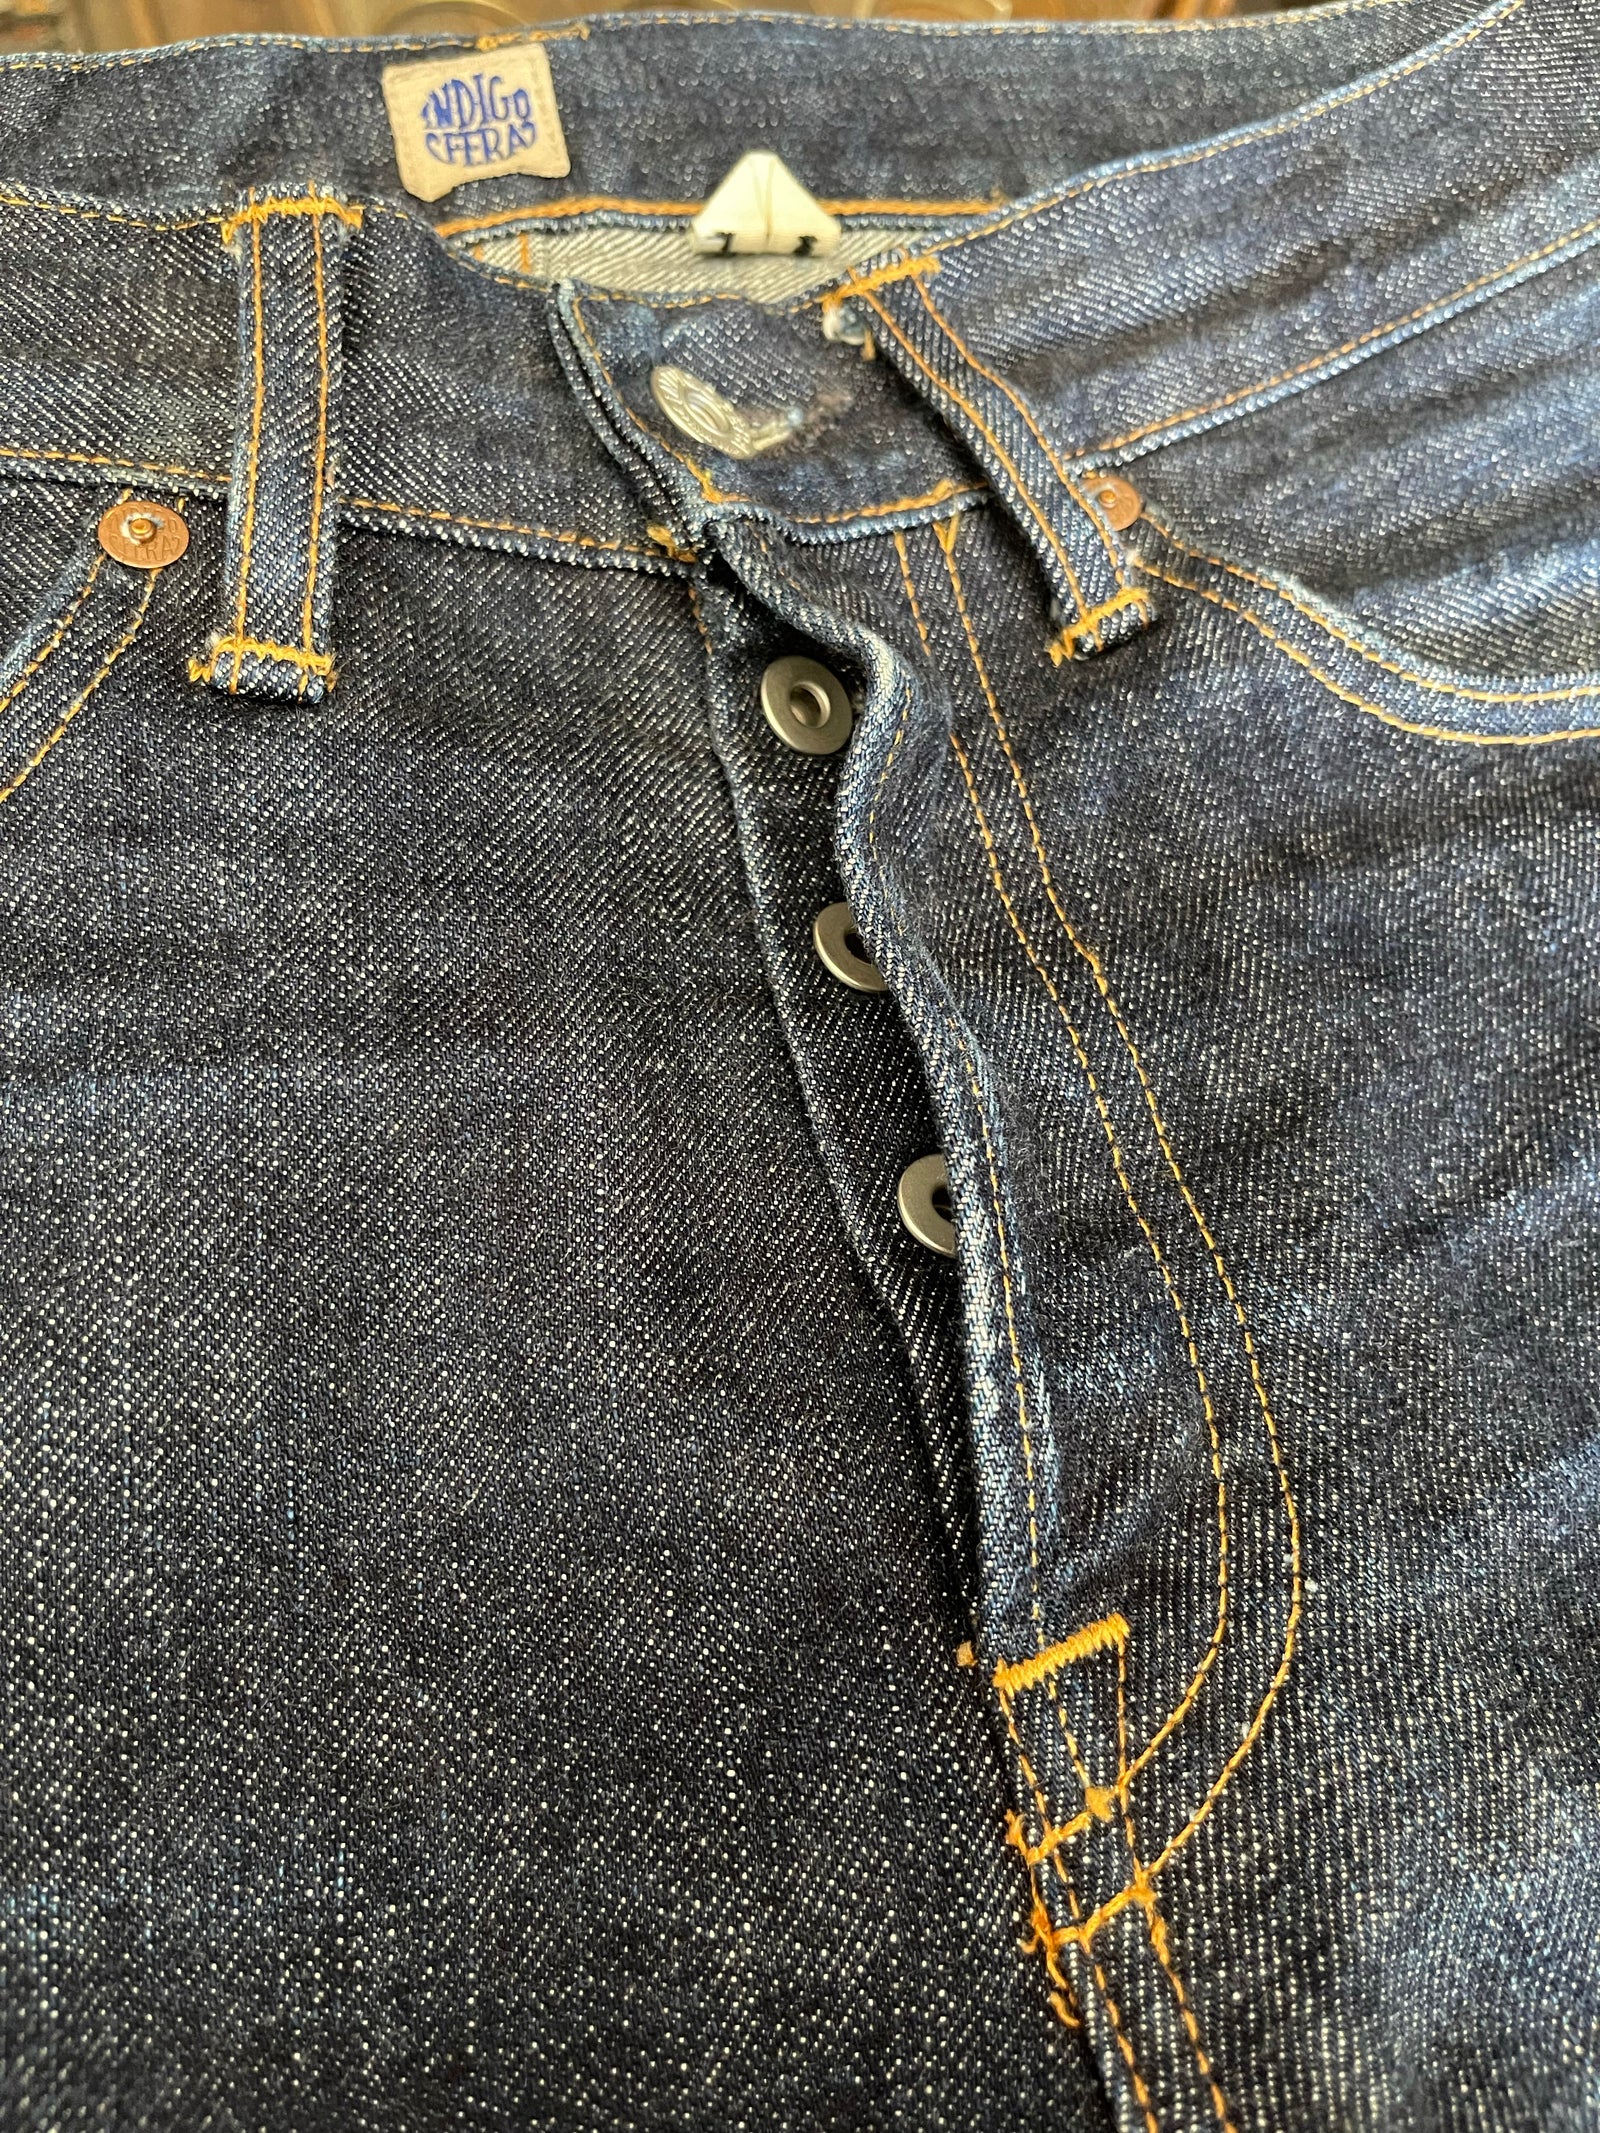 Gently Used Indigofera Buck Jeans in 18oz Selvedge - Indigo